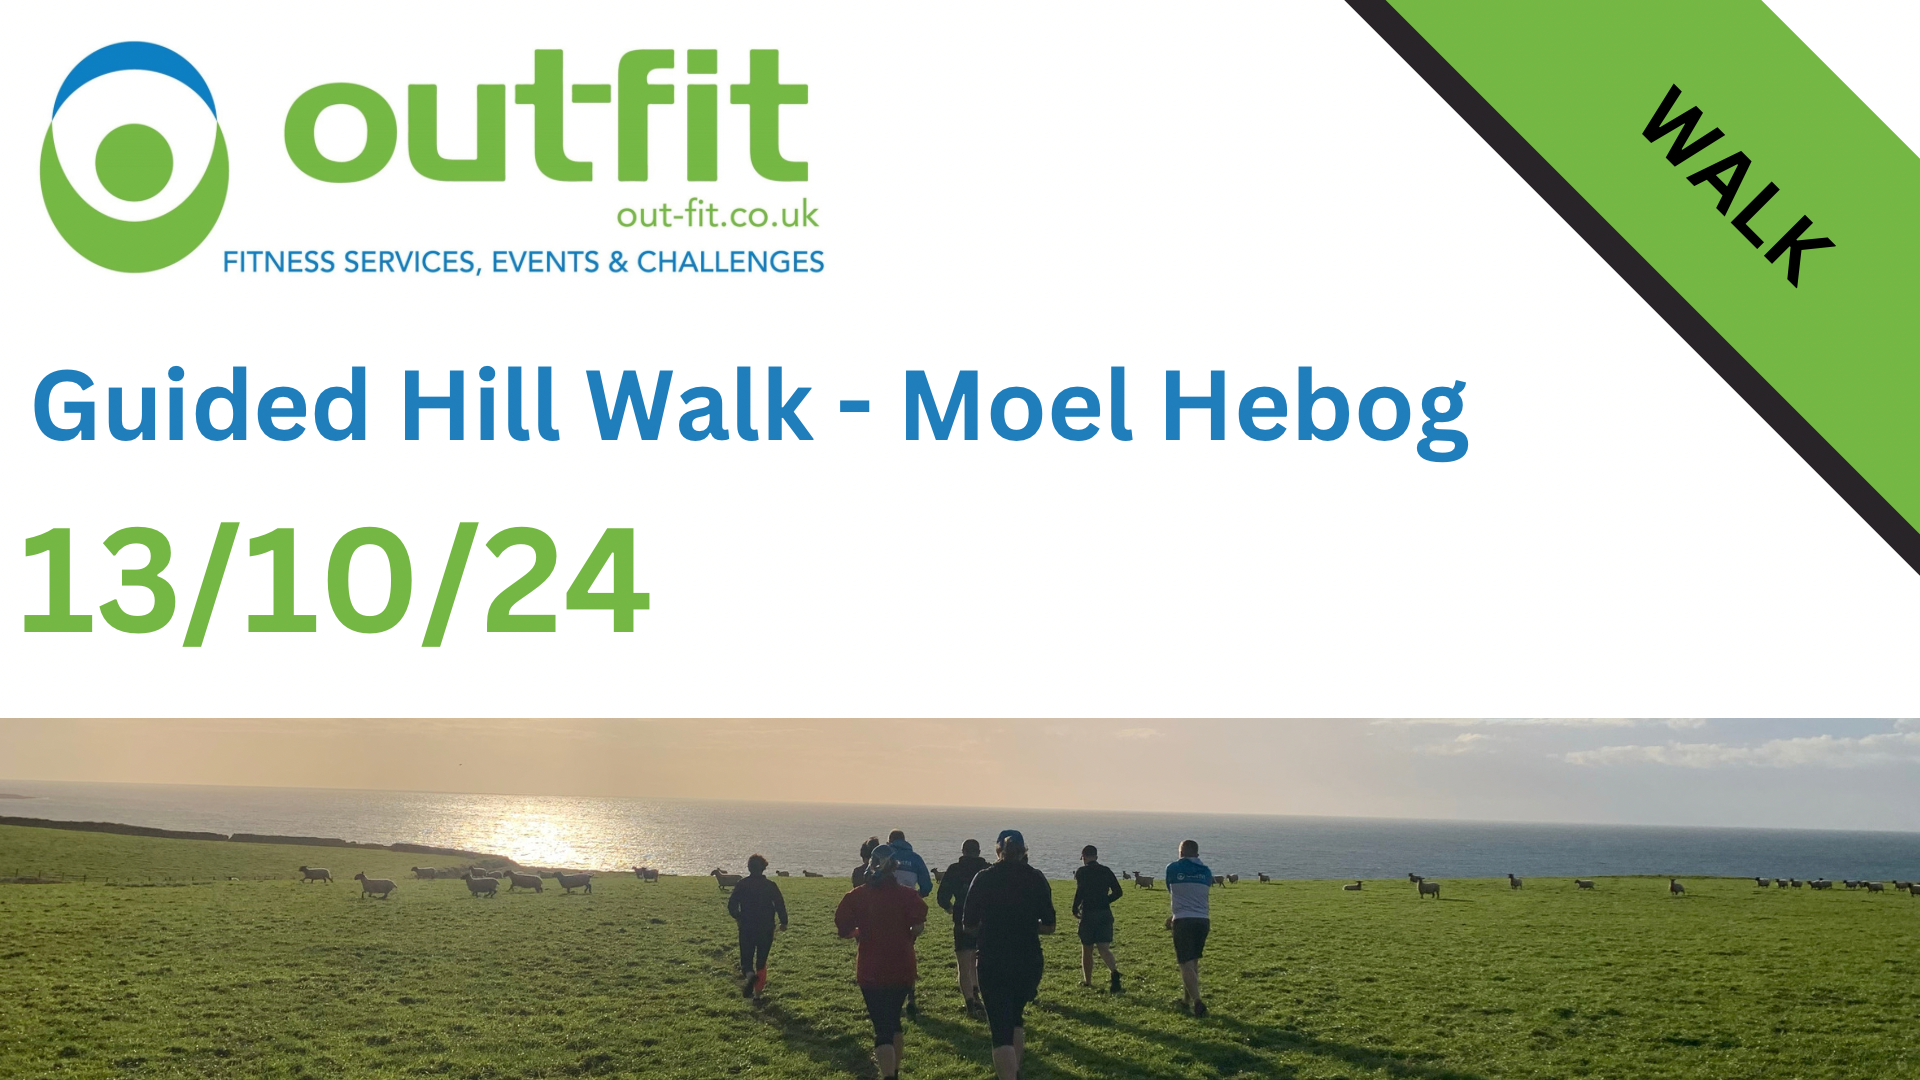 Guided Hill Walk - Moel Hebog